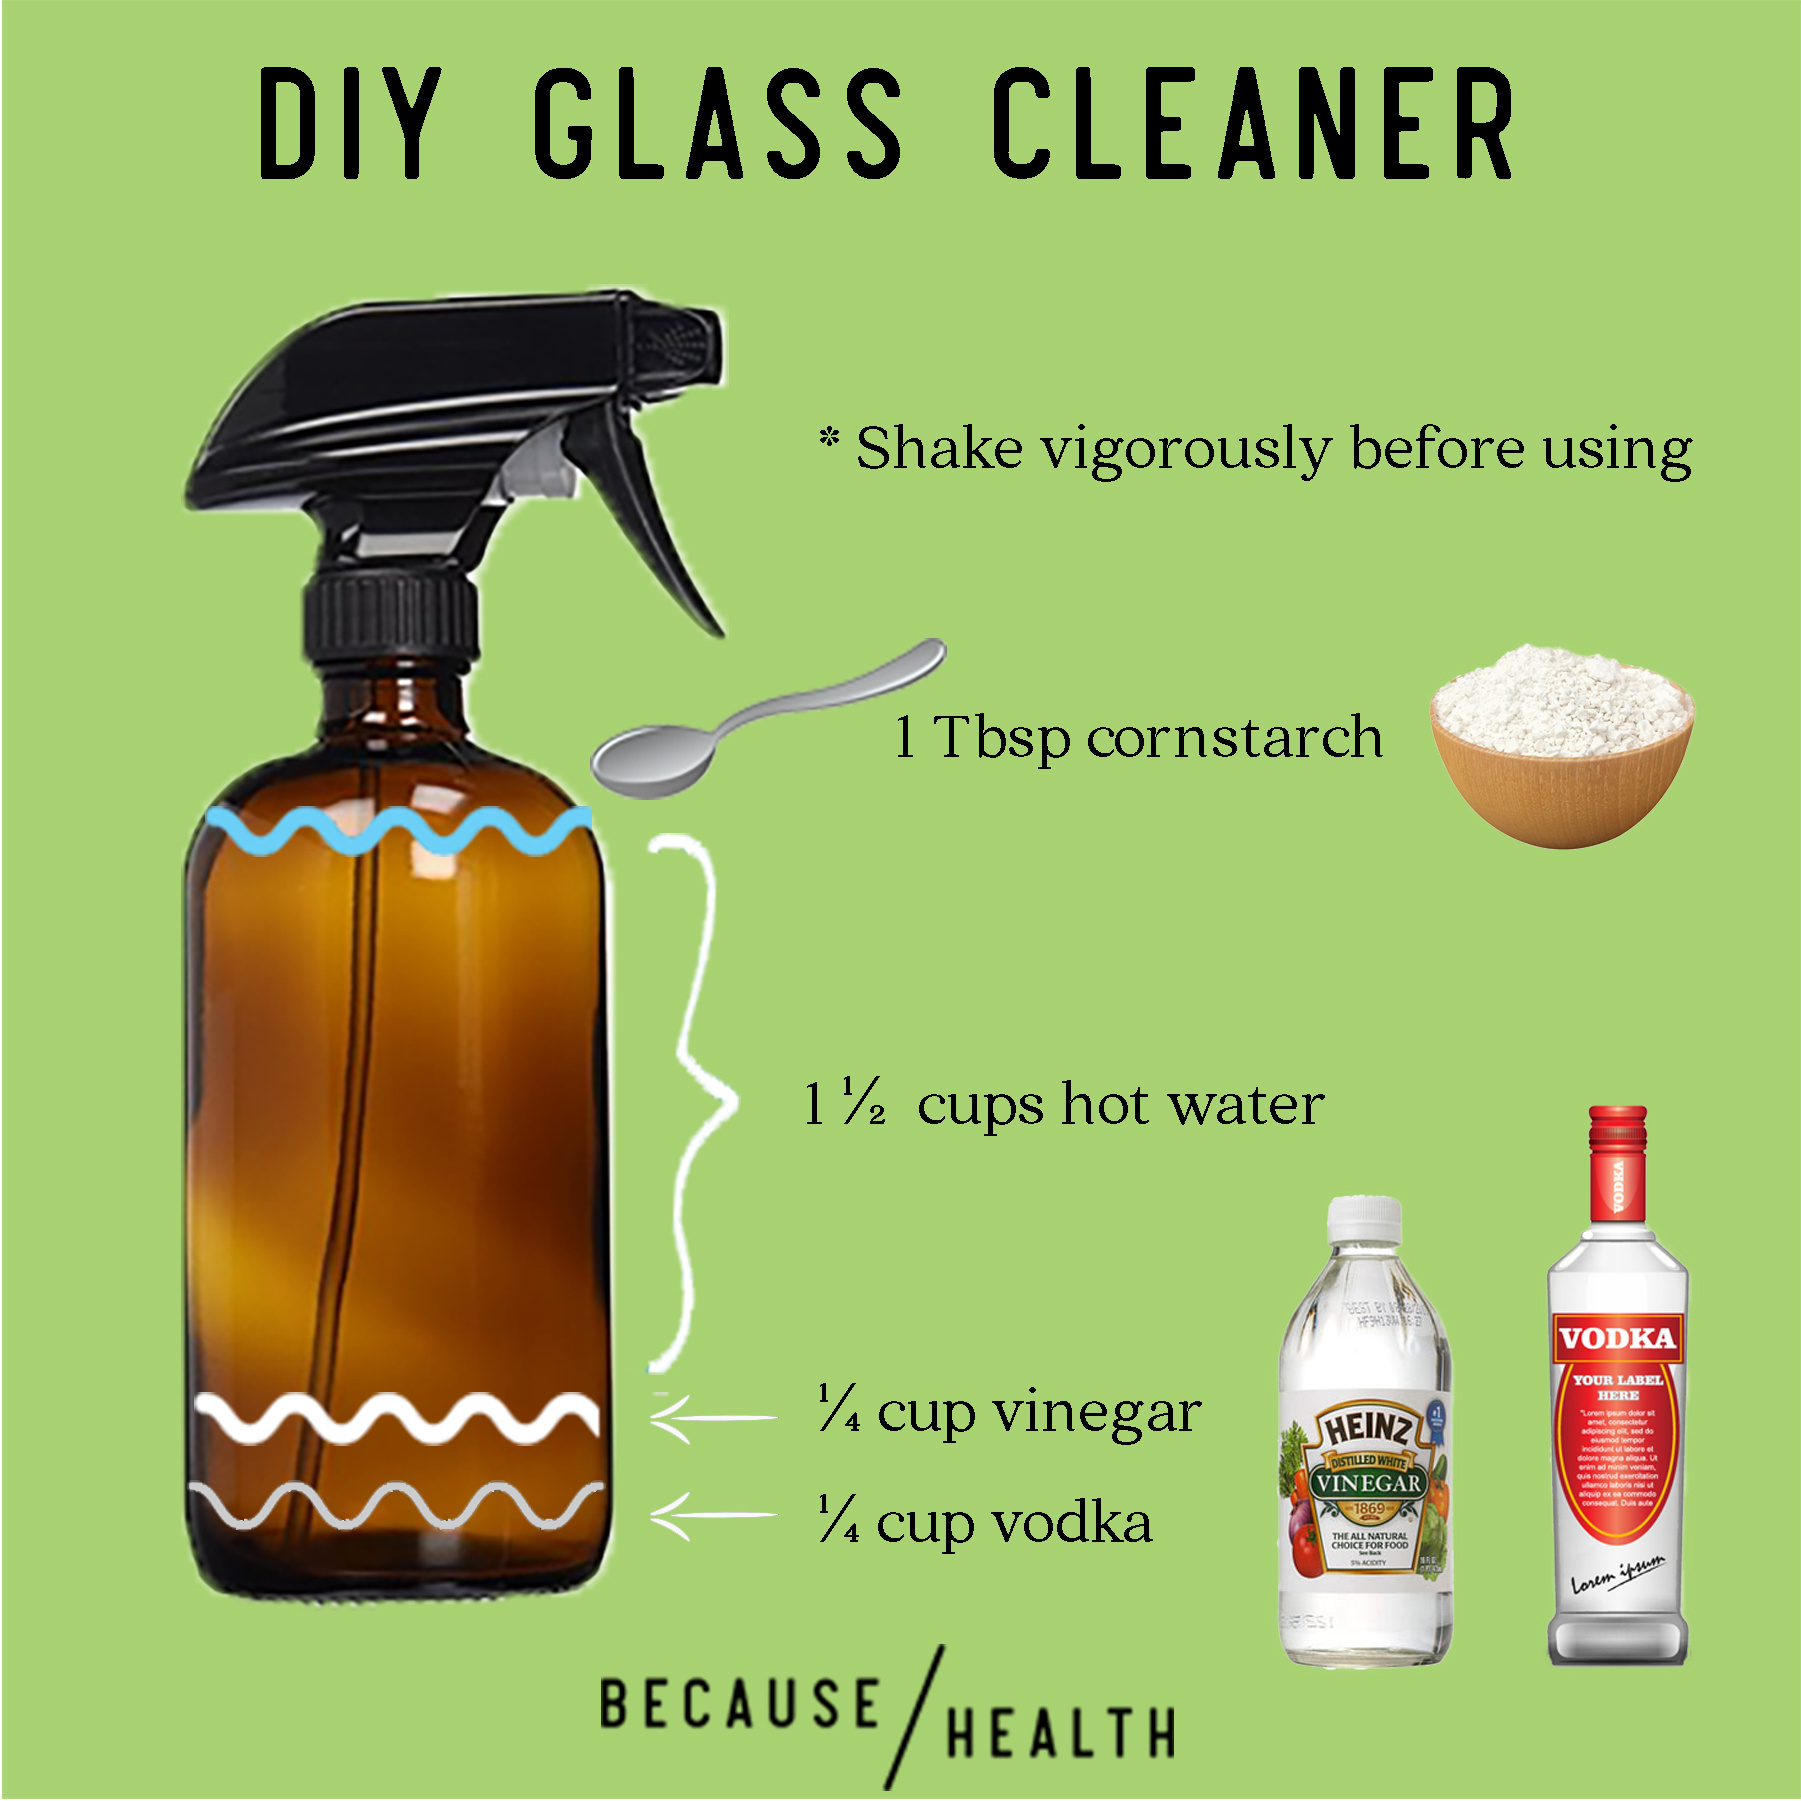 DIY glass cleaner